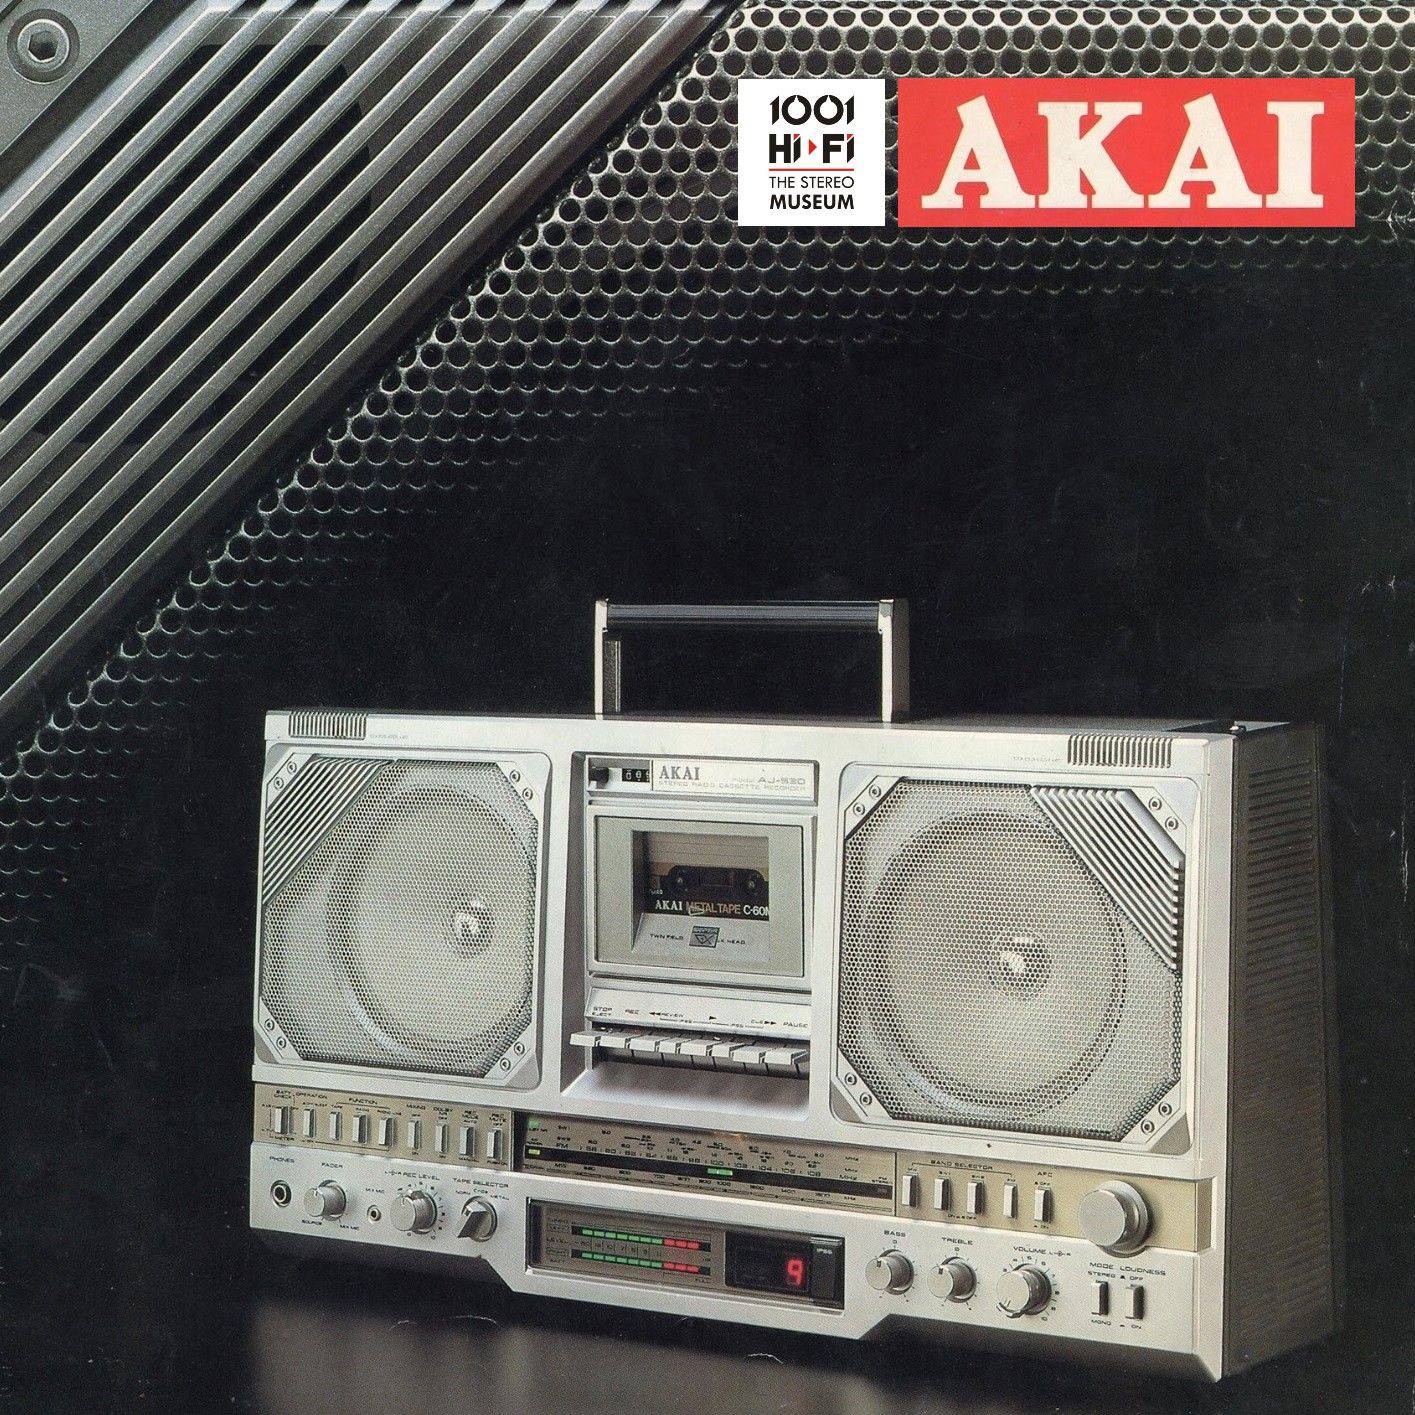 Akai AJ-530